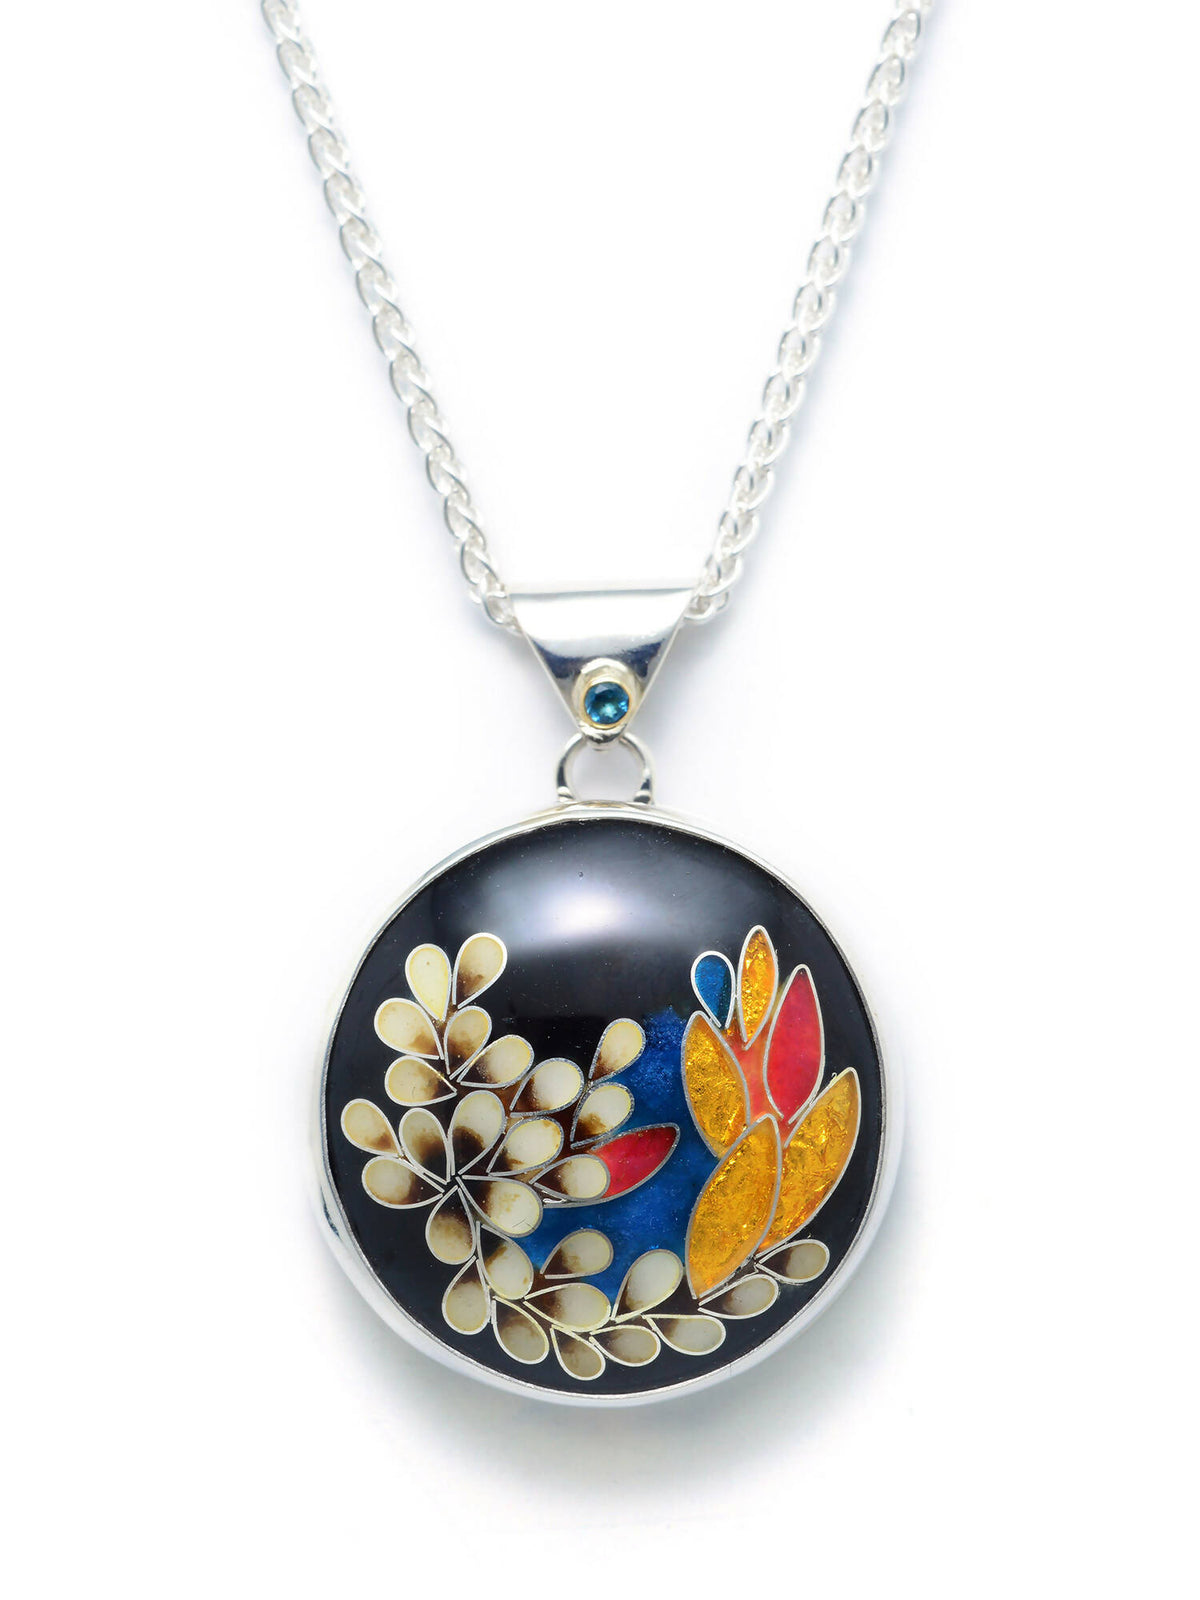 Autumn bloom necklace